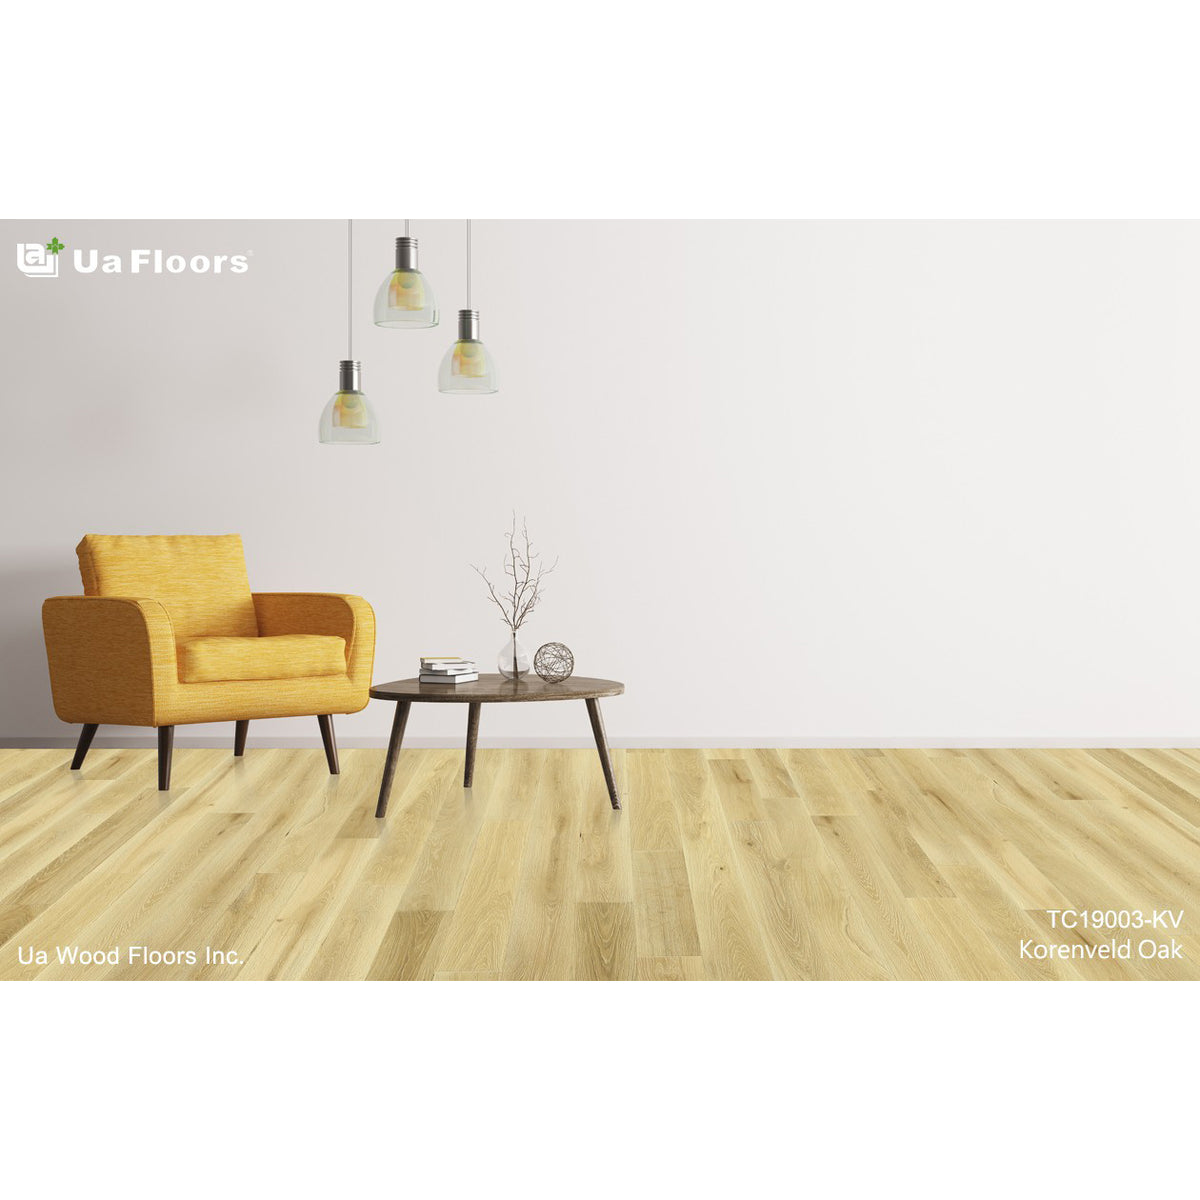 Ua Floors - Classics Collection - Korenveld Euro Oak Room Scene